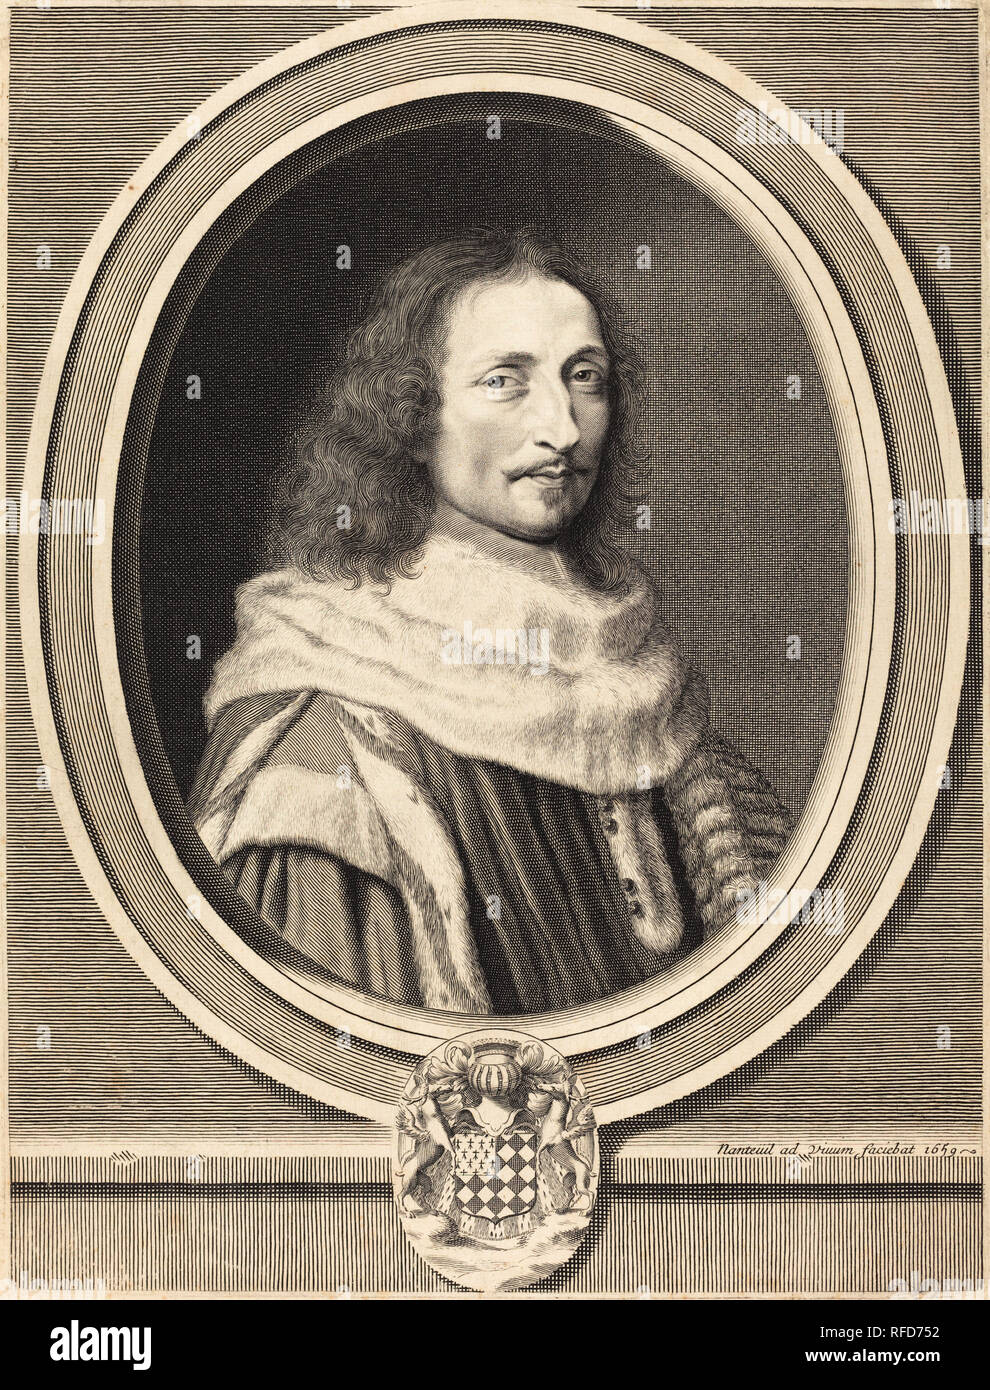 Guillaume de Lamoignon. Dated: 1659. Medium: engraving. Museum: National Gallery of Art, Washington DC. Author: Robert Nanteuil. Stock Photo